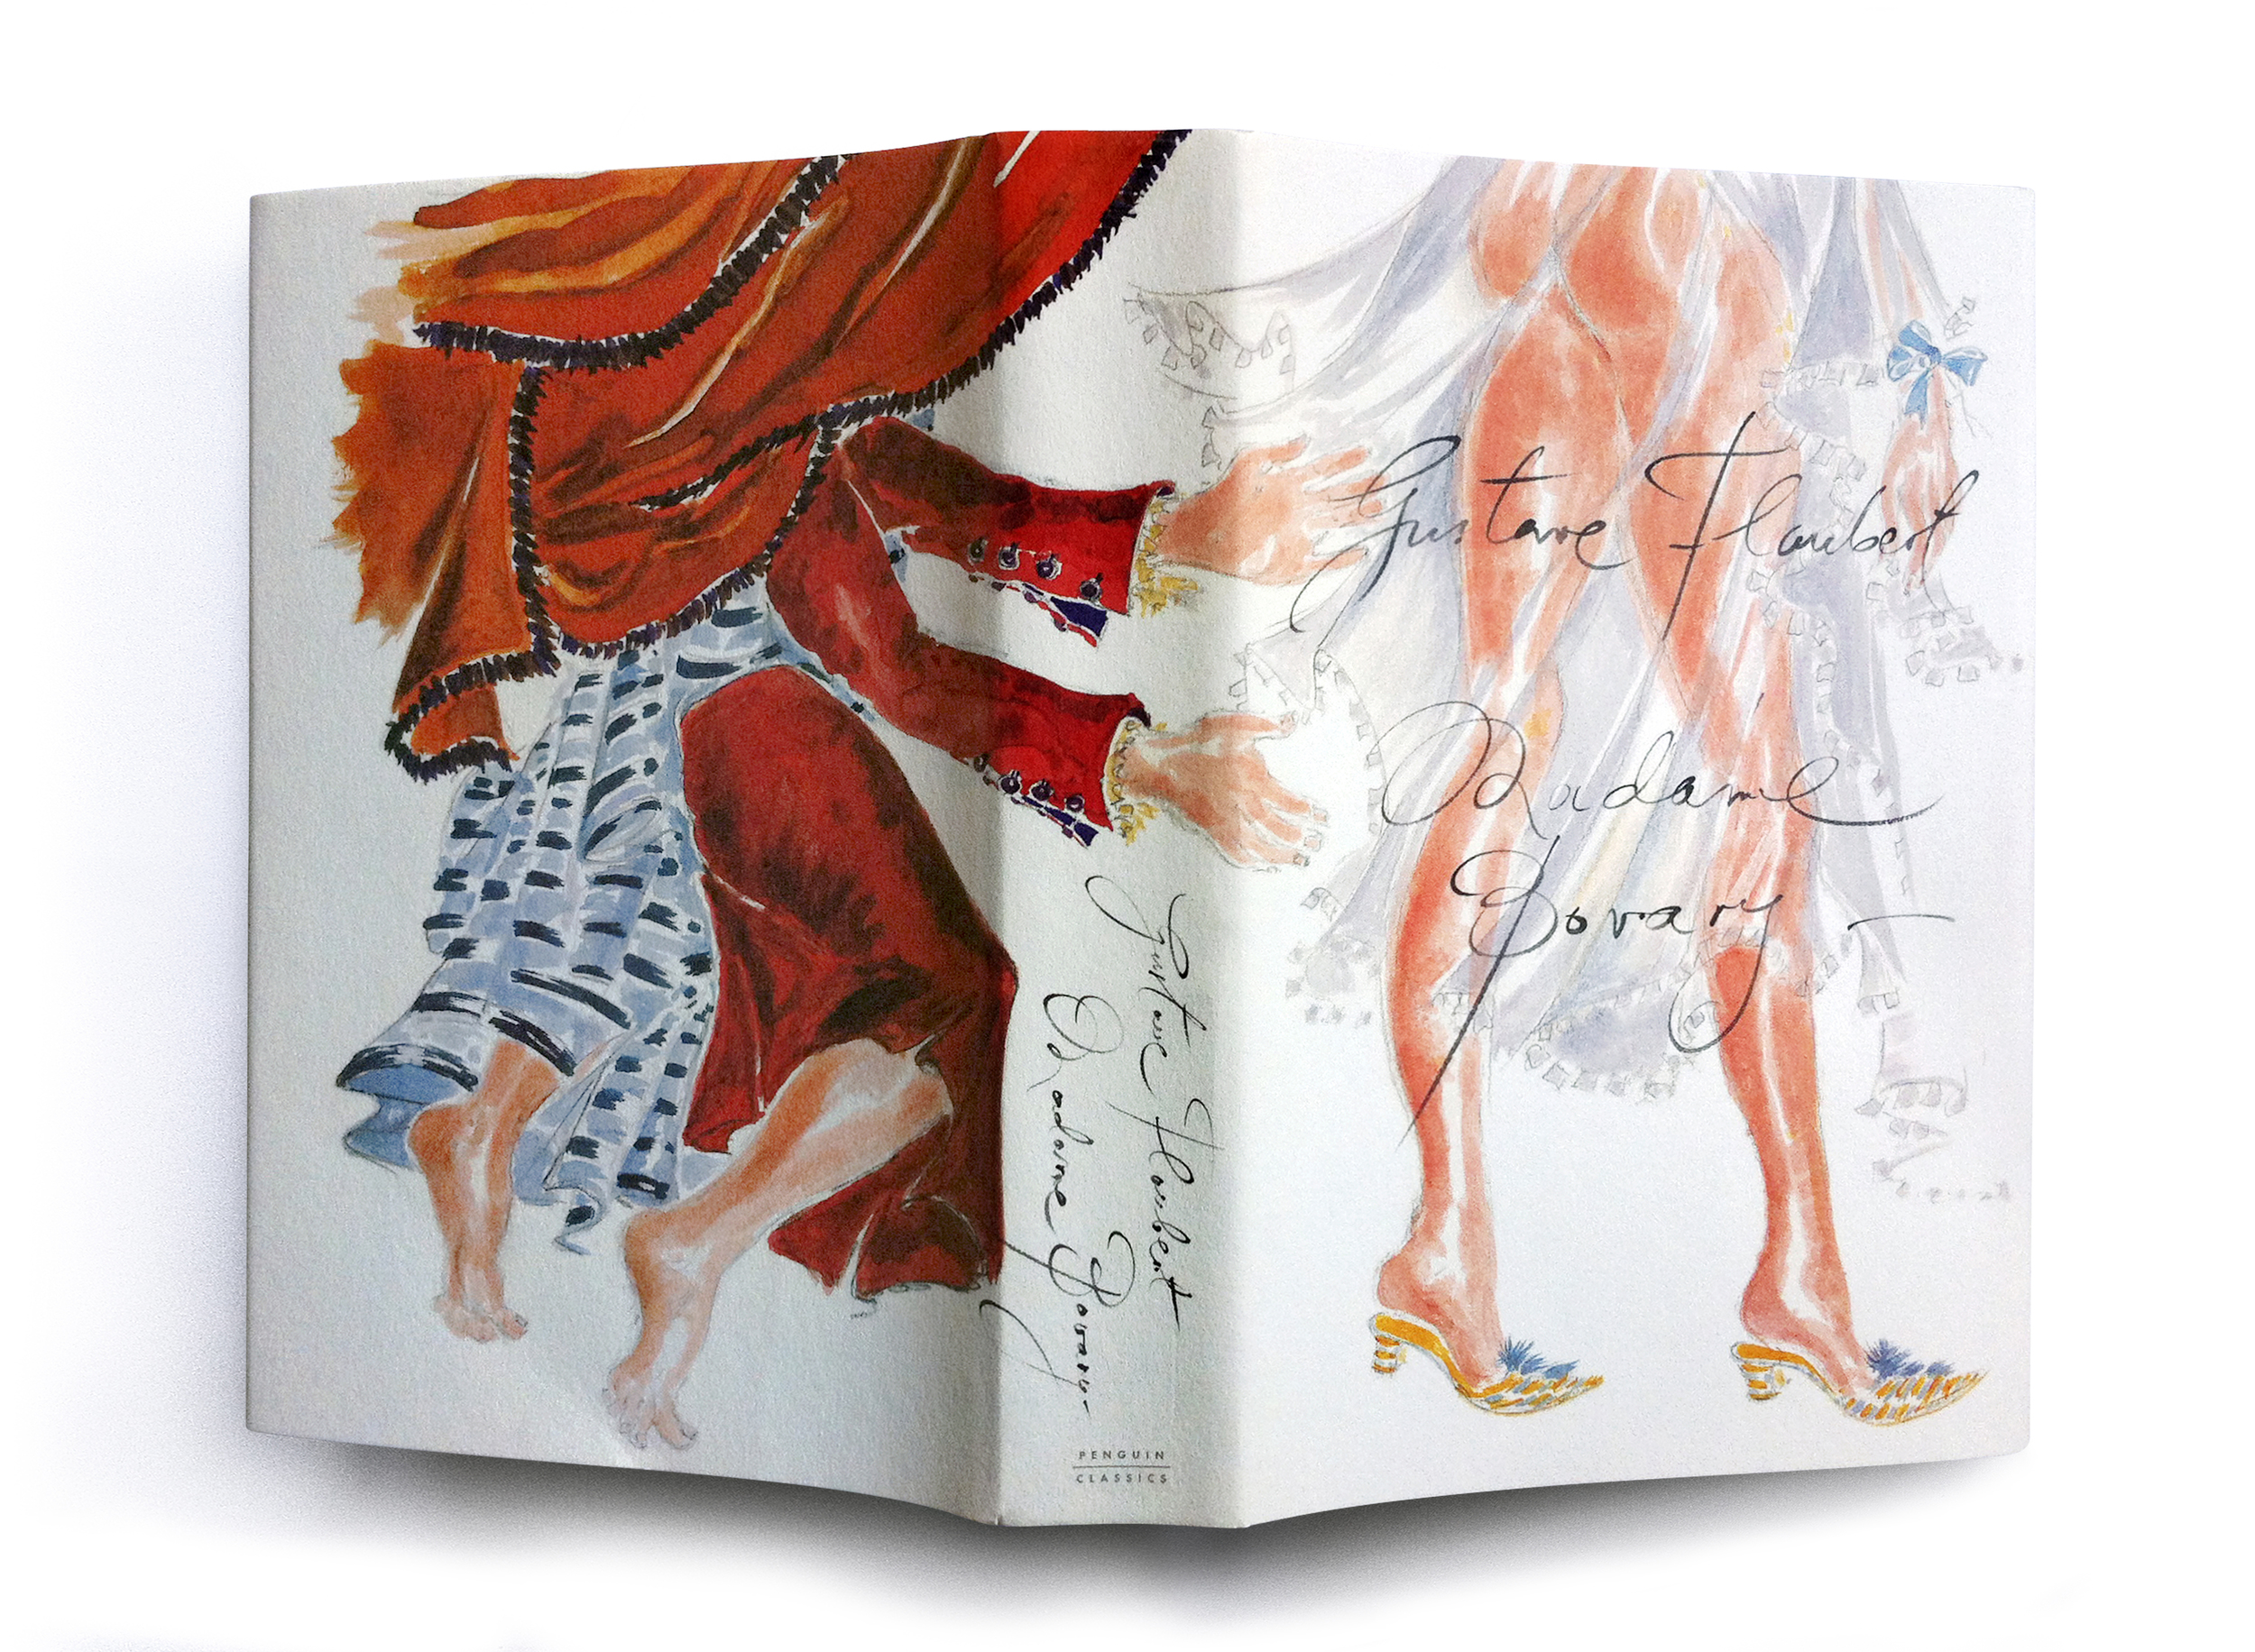  Madame Bovary by Gustave Flaubert (Penguin Classics 60th anniversary hardback) -&nbsp; Art &amp; lettering: Manolo Blahnik  &nbsp;&nbsp; 